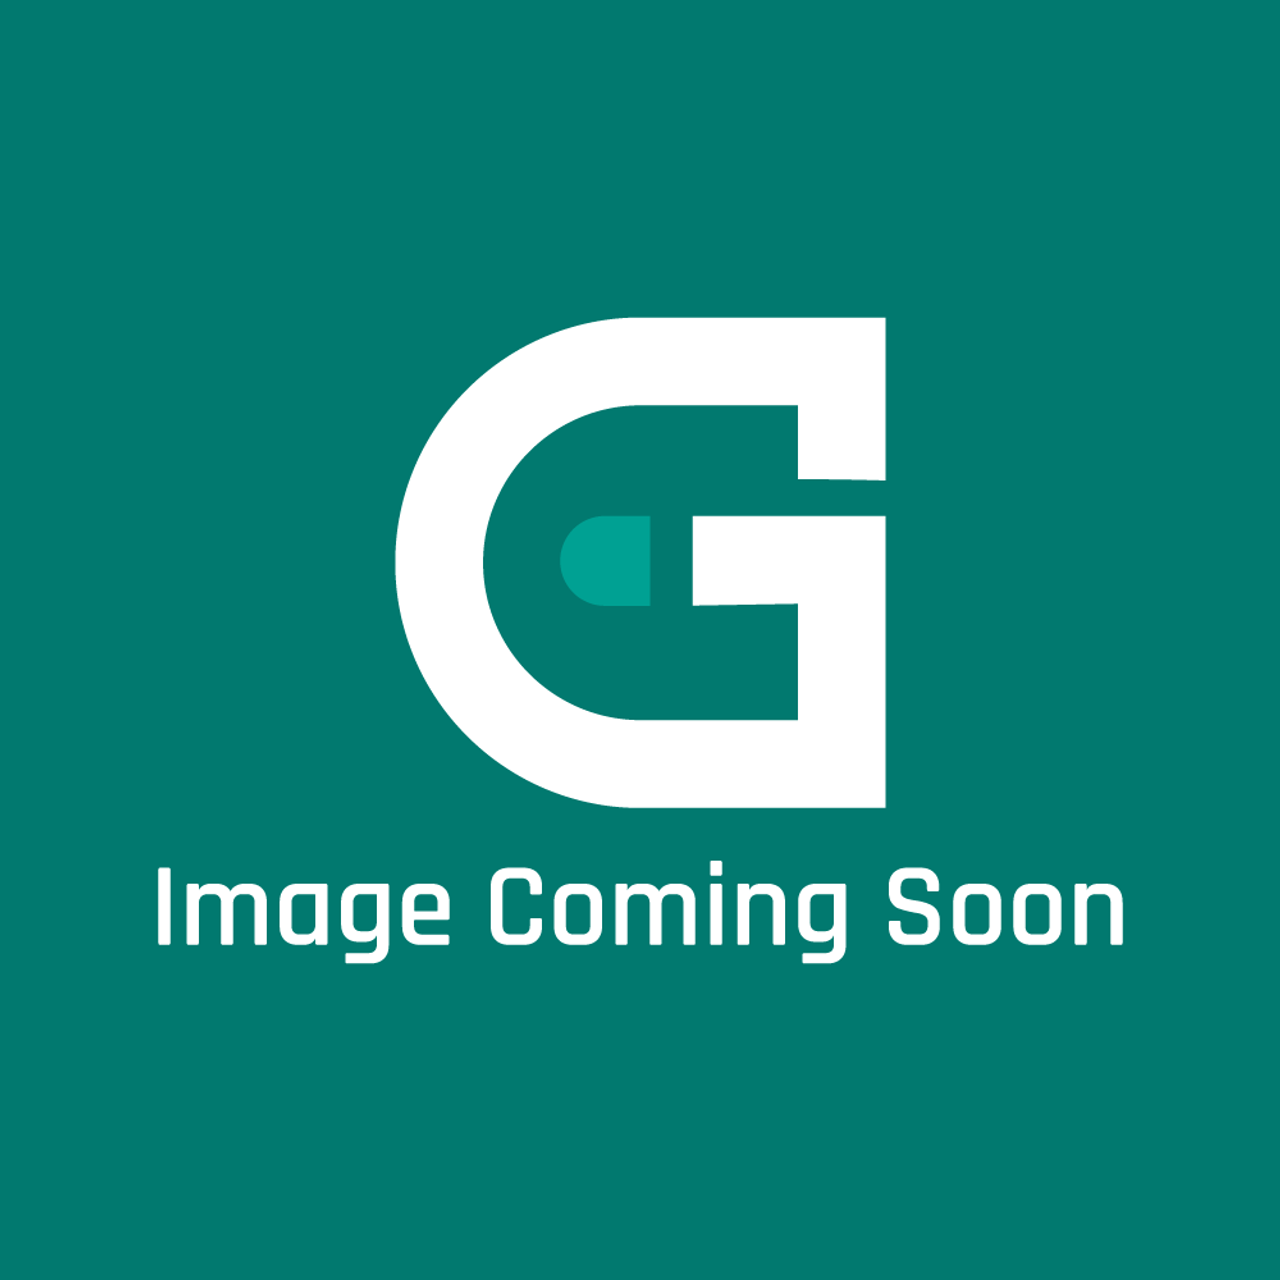 Groen 139652 - Flue Stack, Ahs-40 - Image Coming Soon!